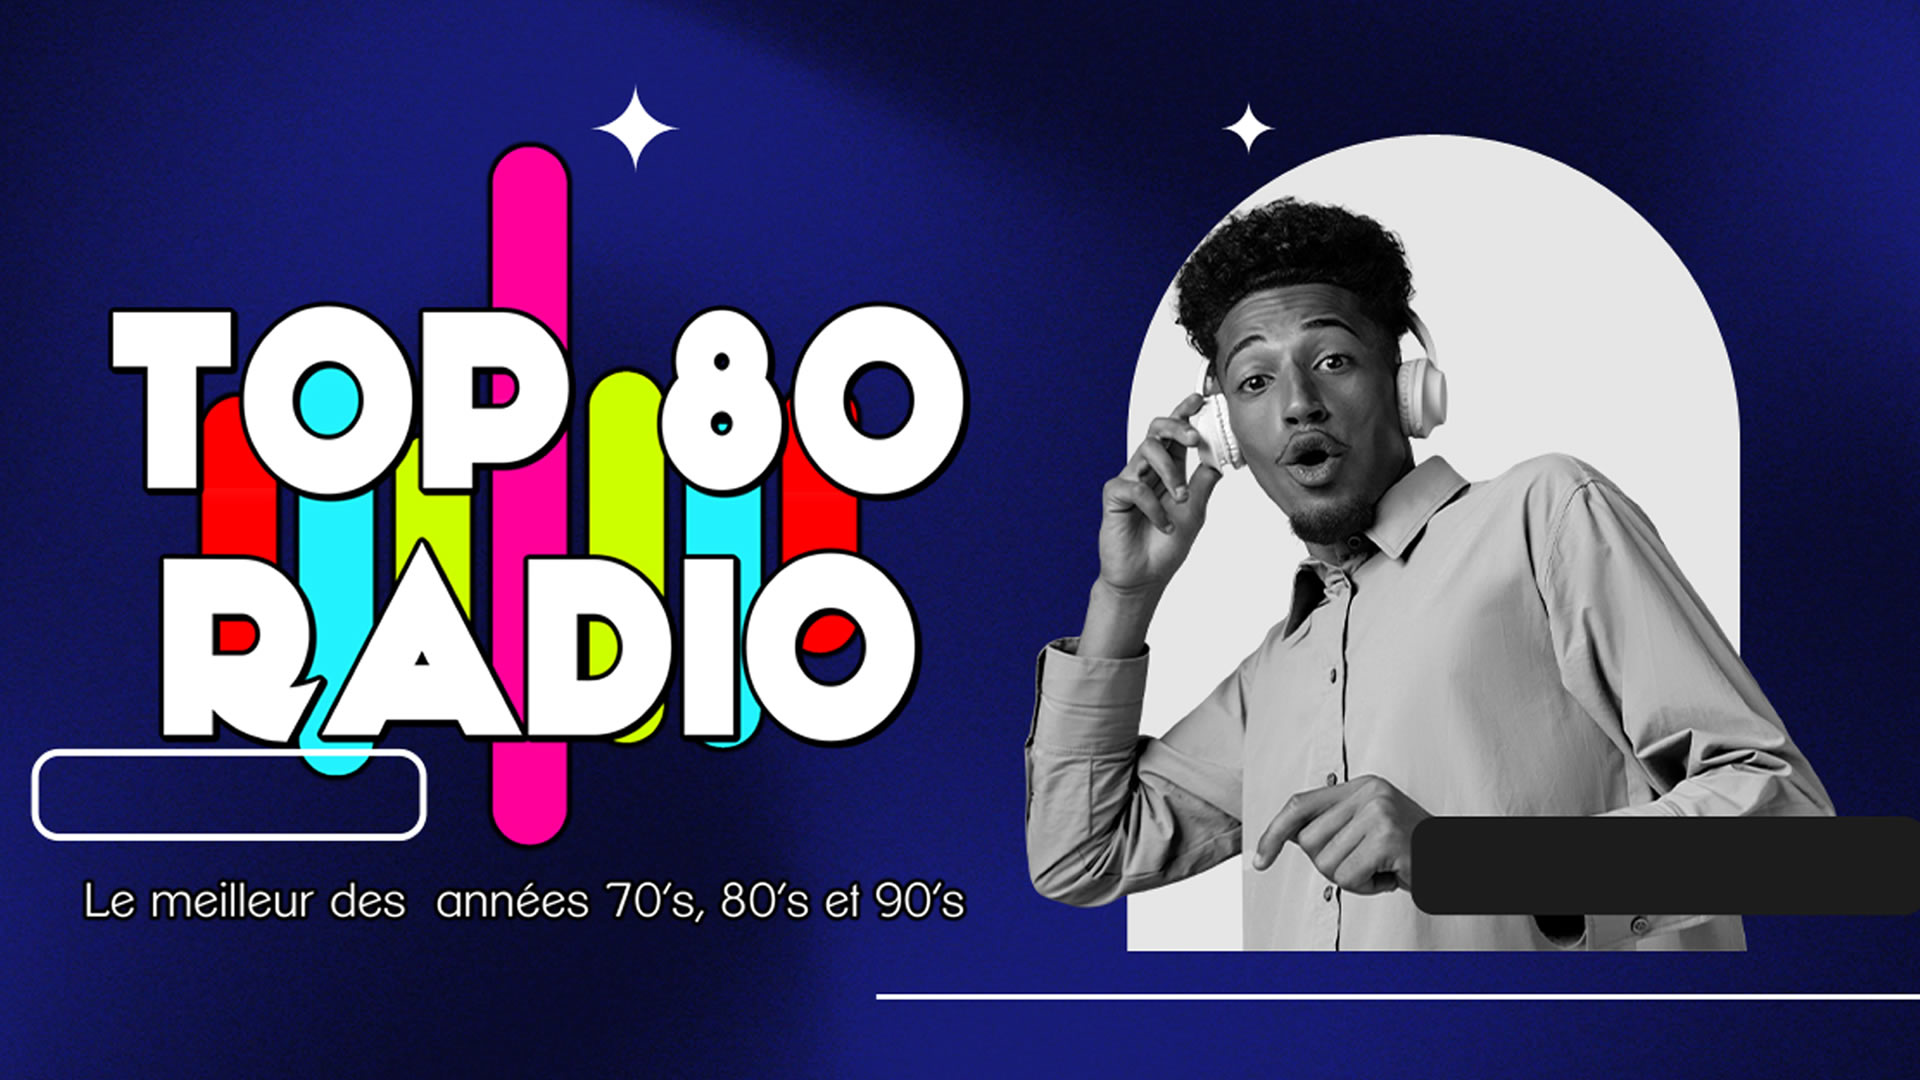 WALLPAPER–TOP-80-RADIO—57